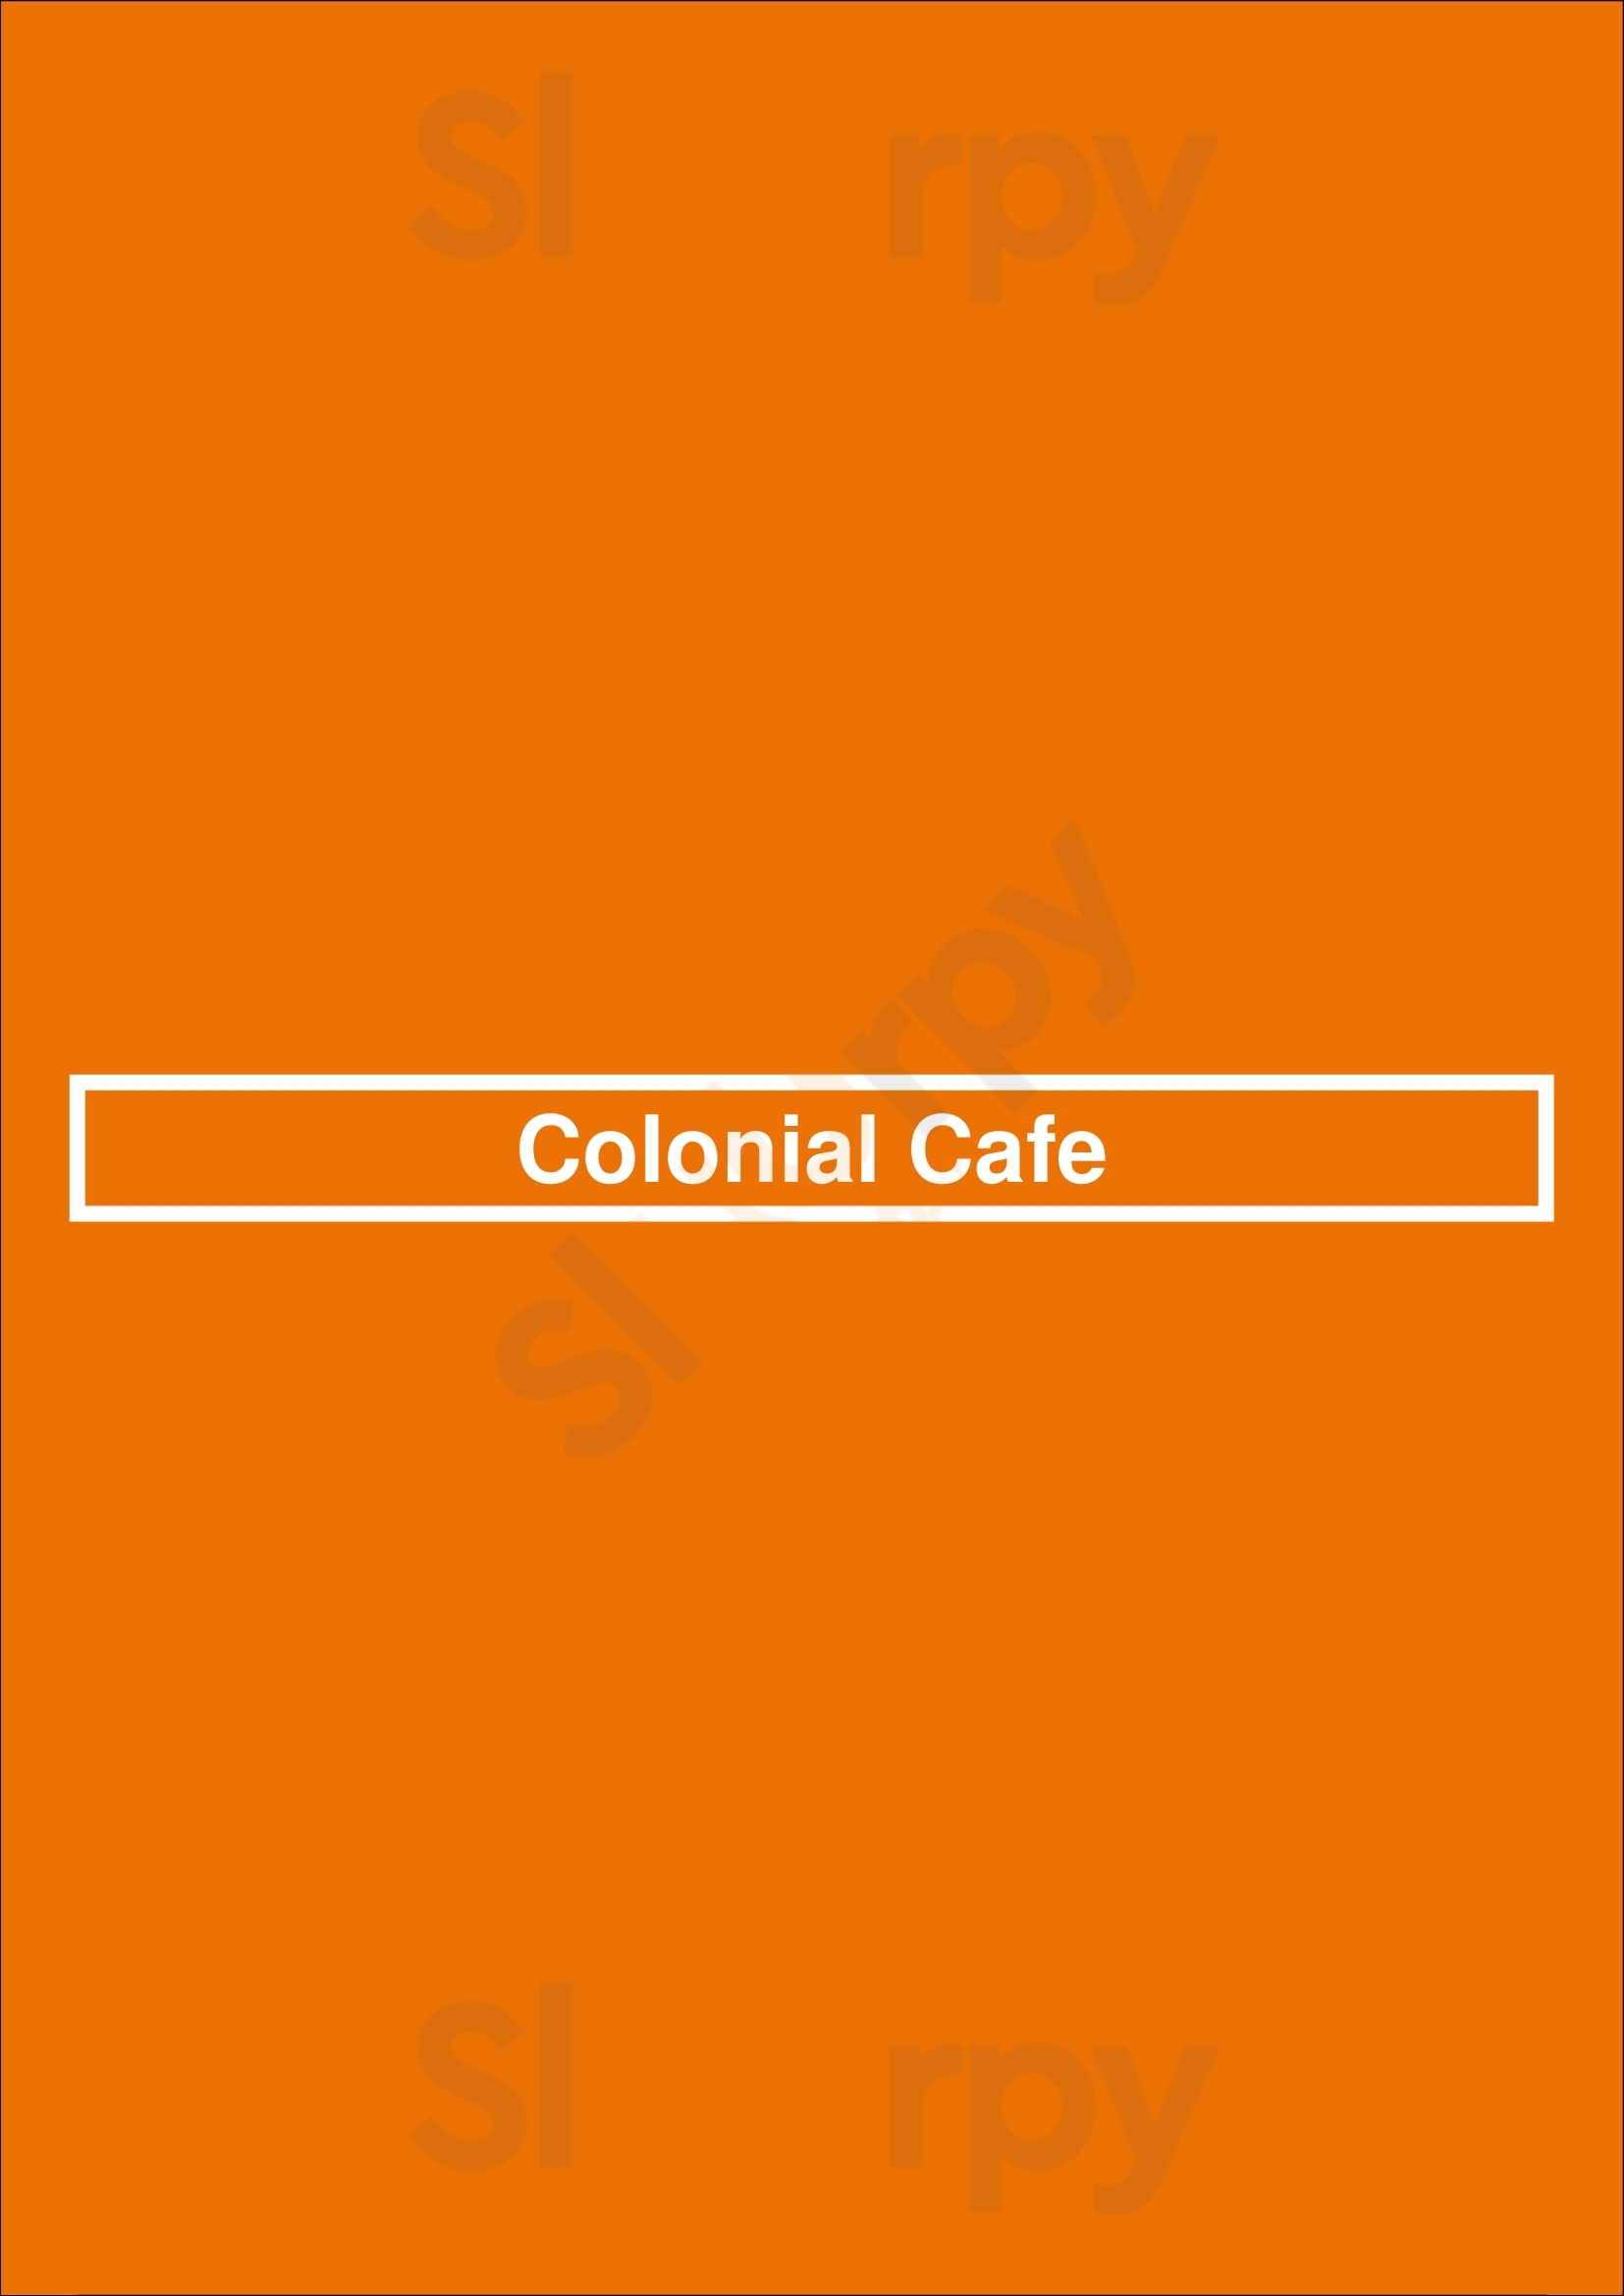 Colonial Cafe Aurora Menu - 1